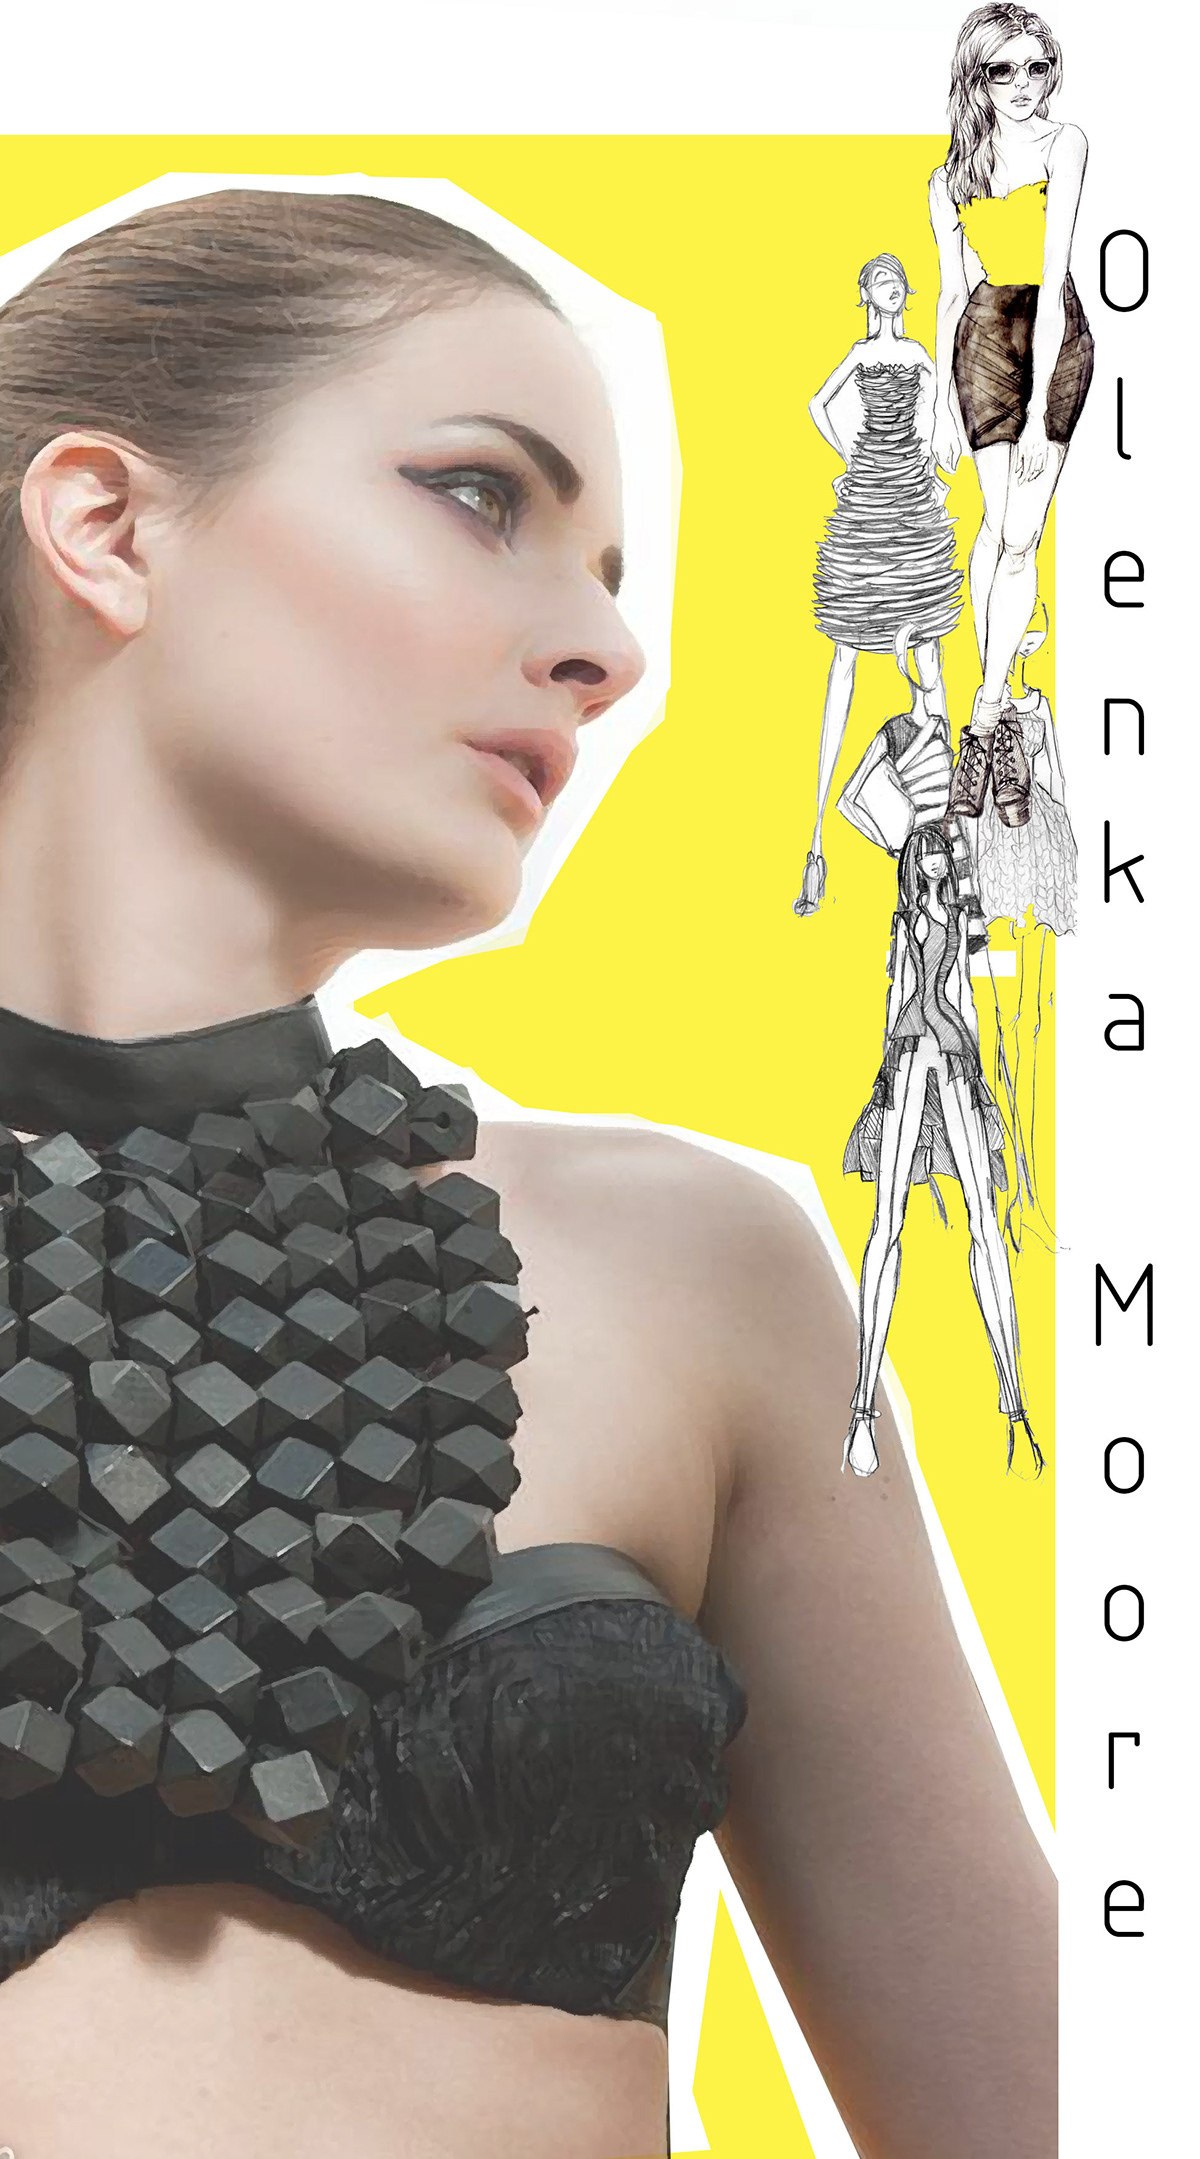 olenka moore  presentation black modeling summer trends new designs feathers